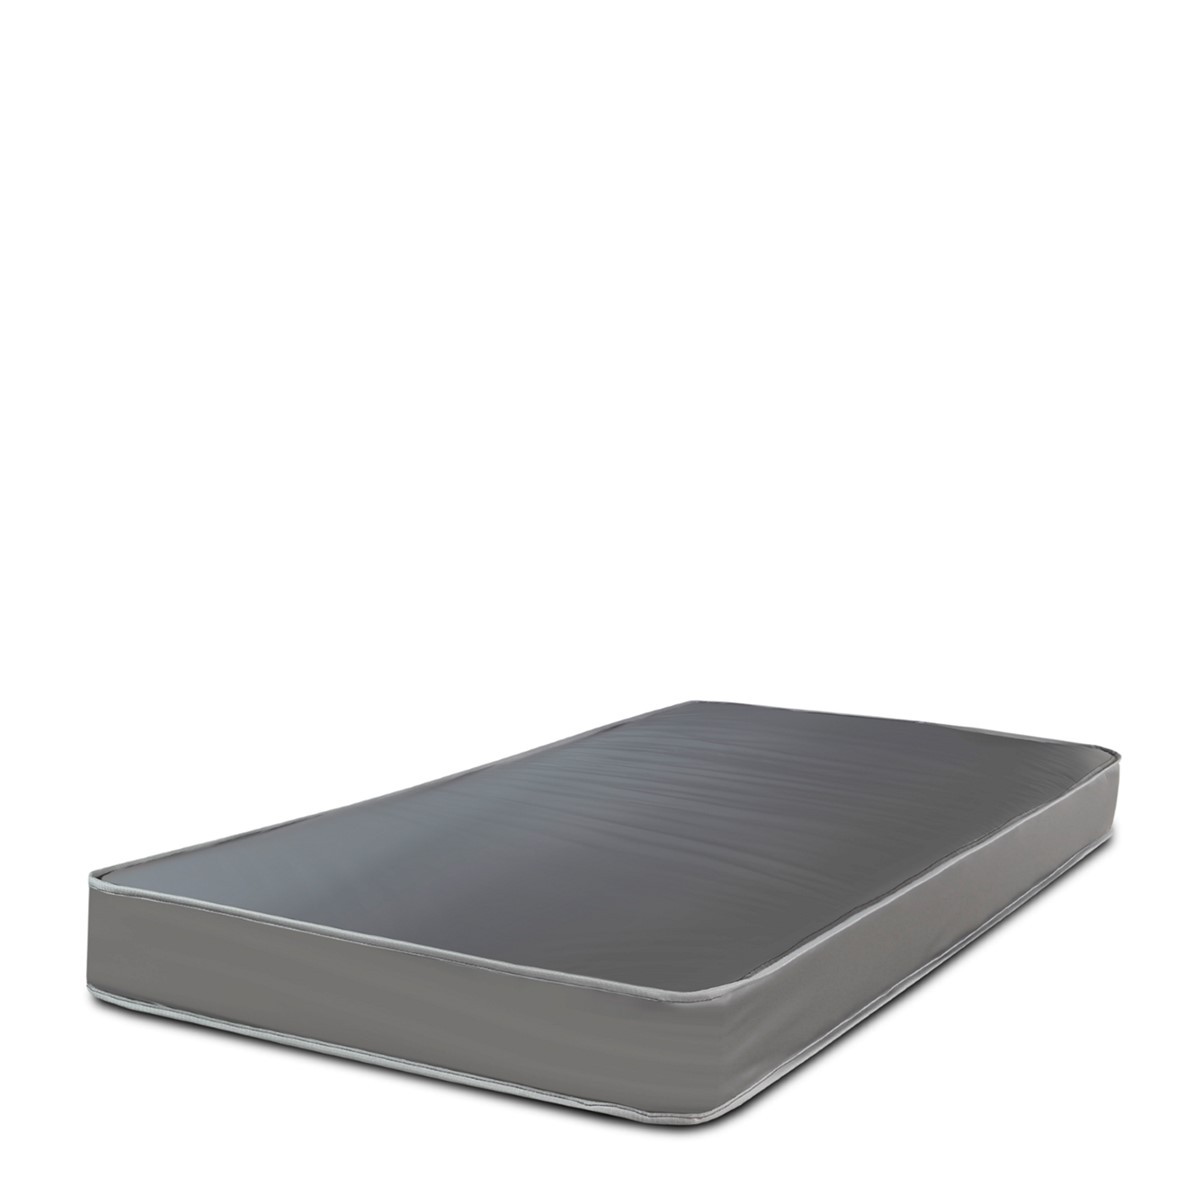 Cs3c02 v series grey vinyl mattress leisters furniture